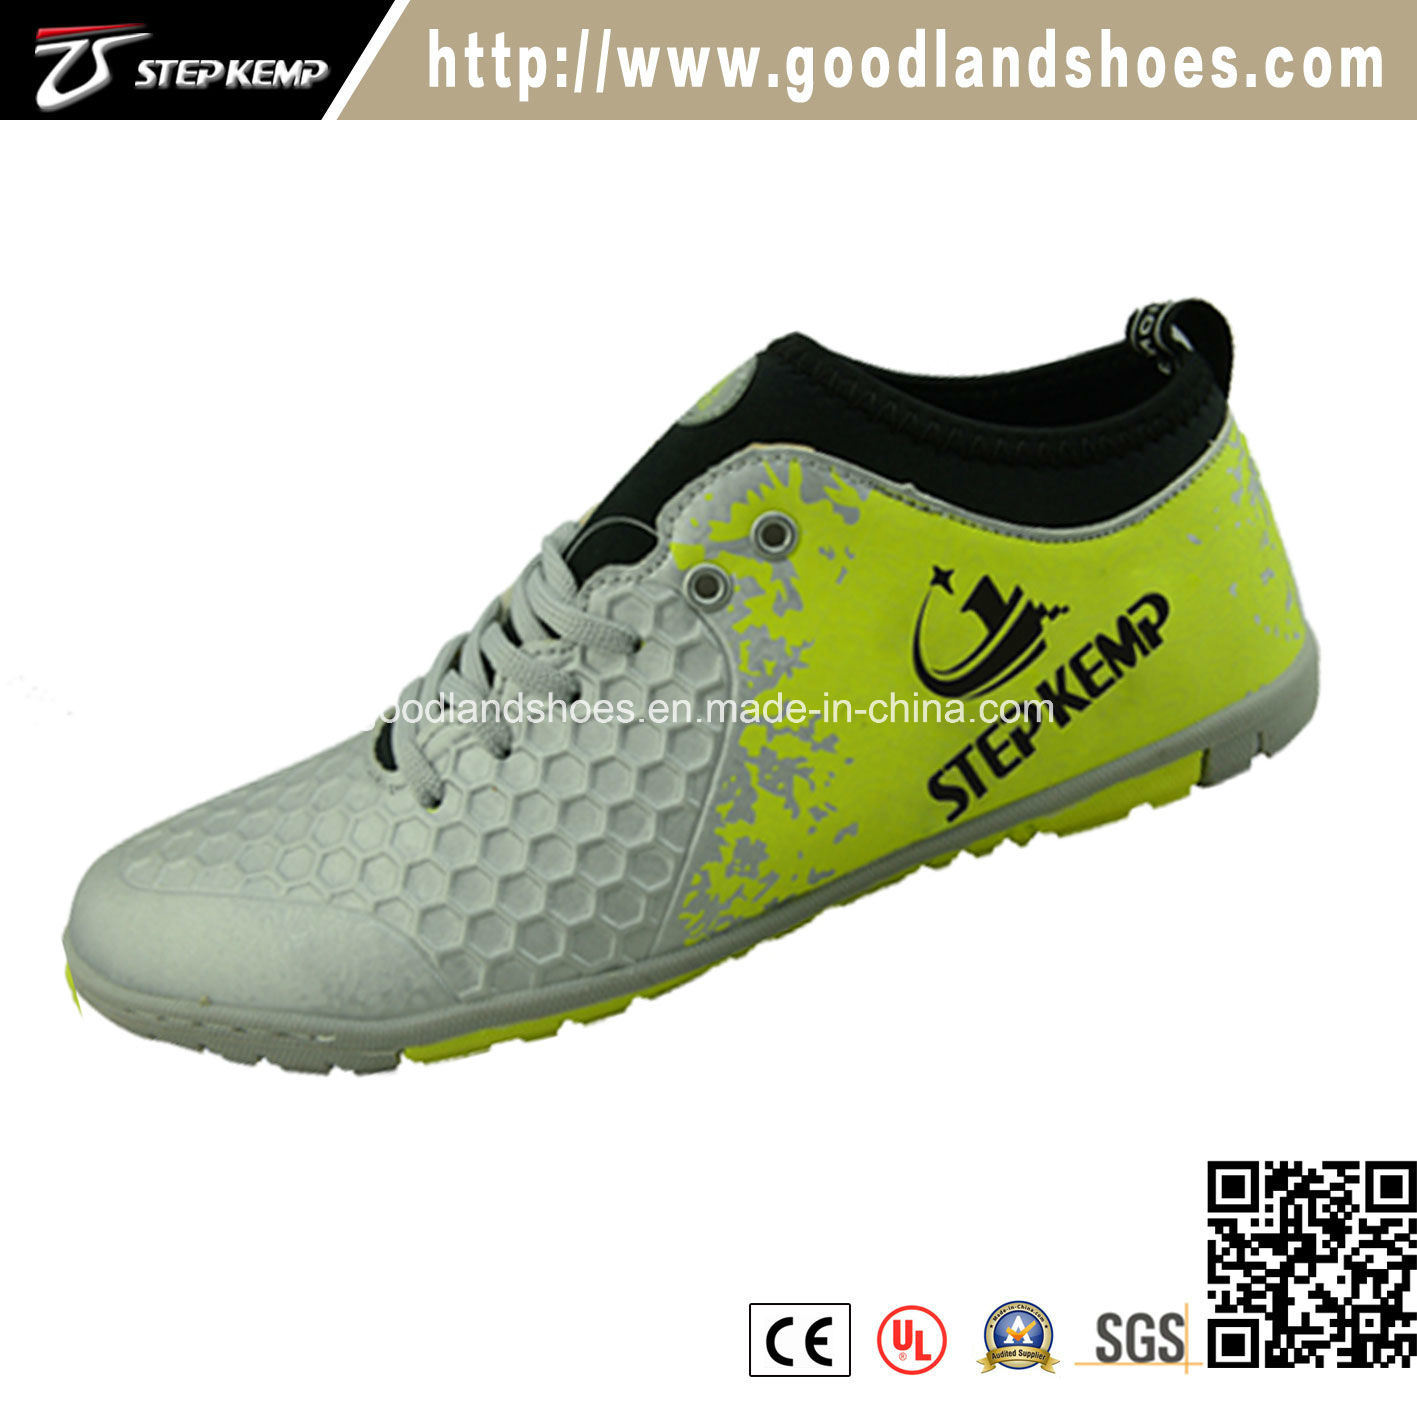 New Fashion Men's Sport Football Soccer Shoes 20070-2